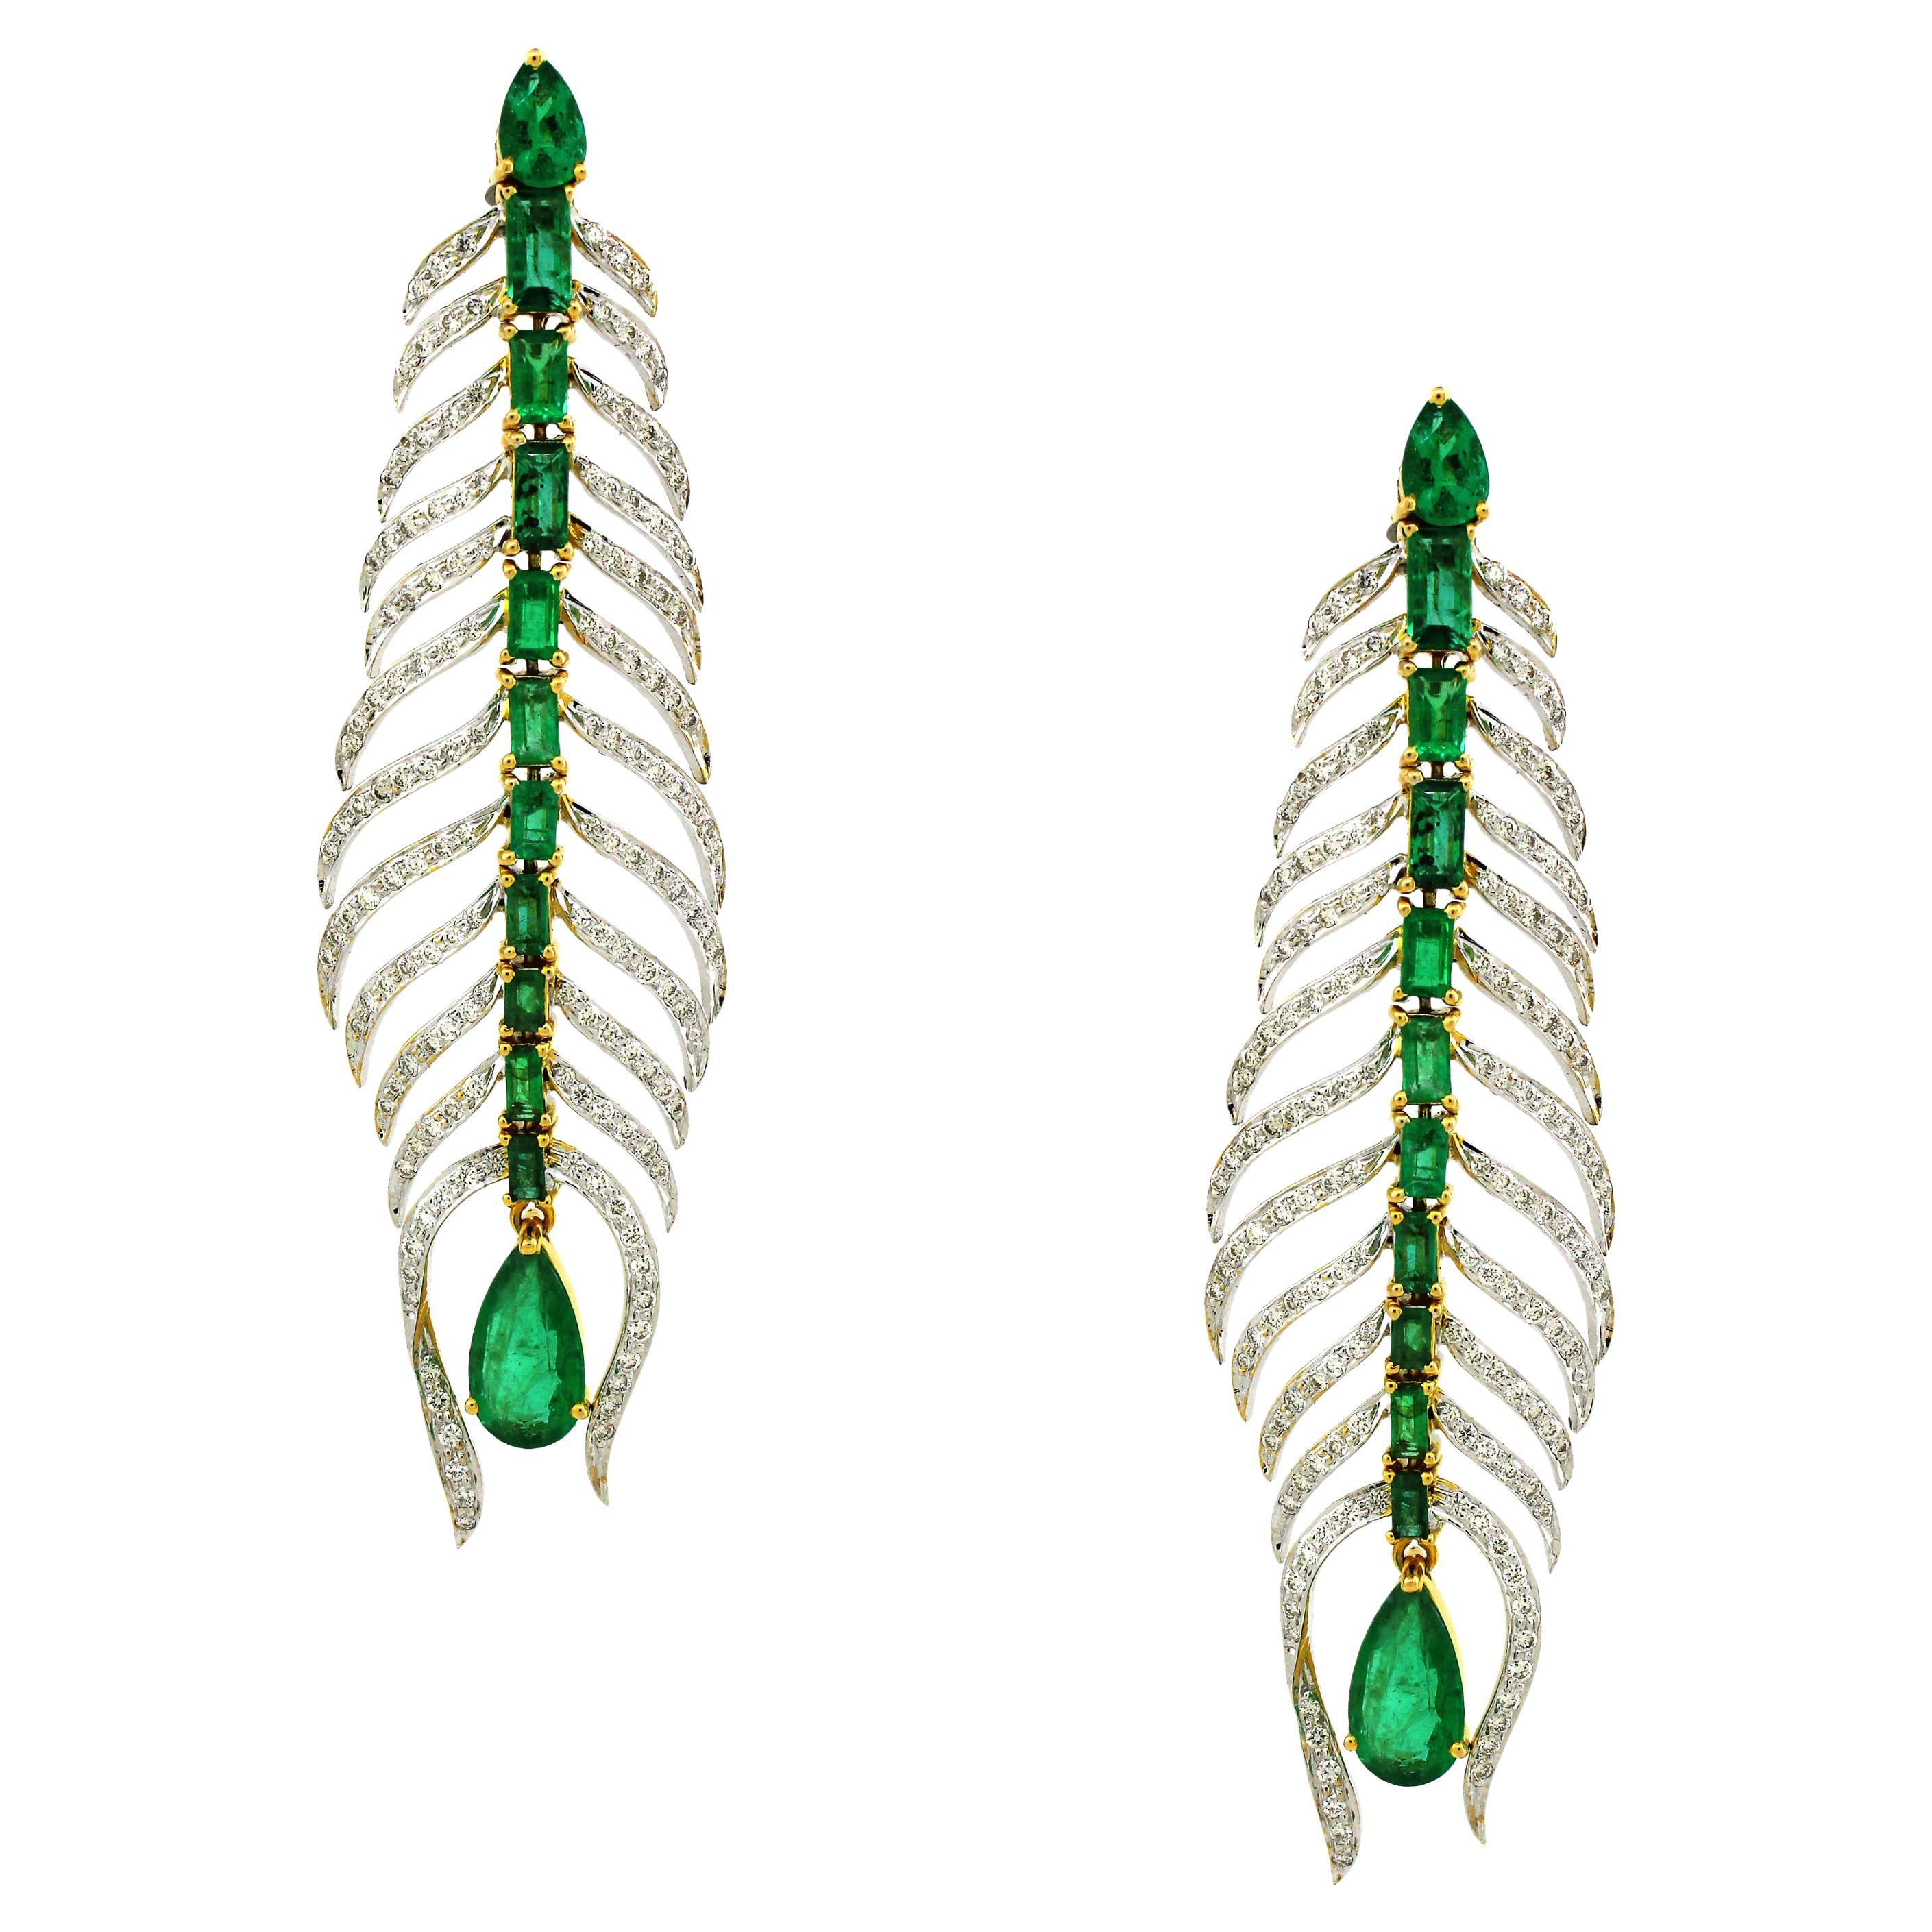 5.63 carats of Emerald Drop Earrings